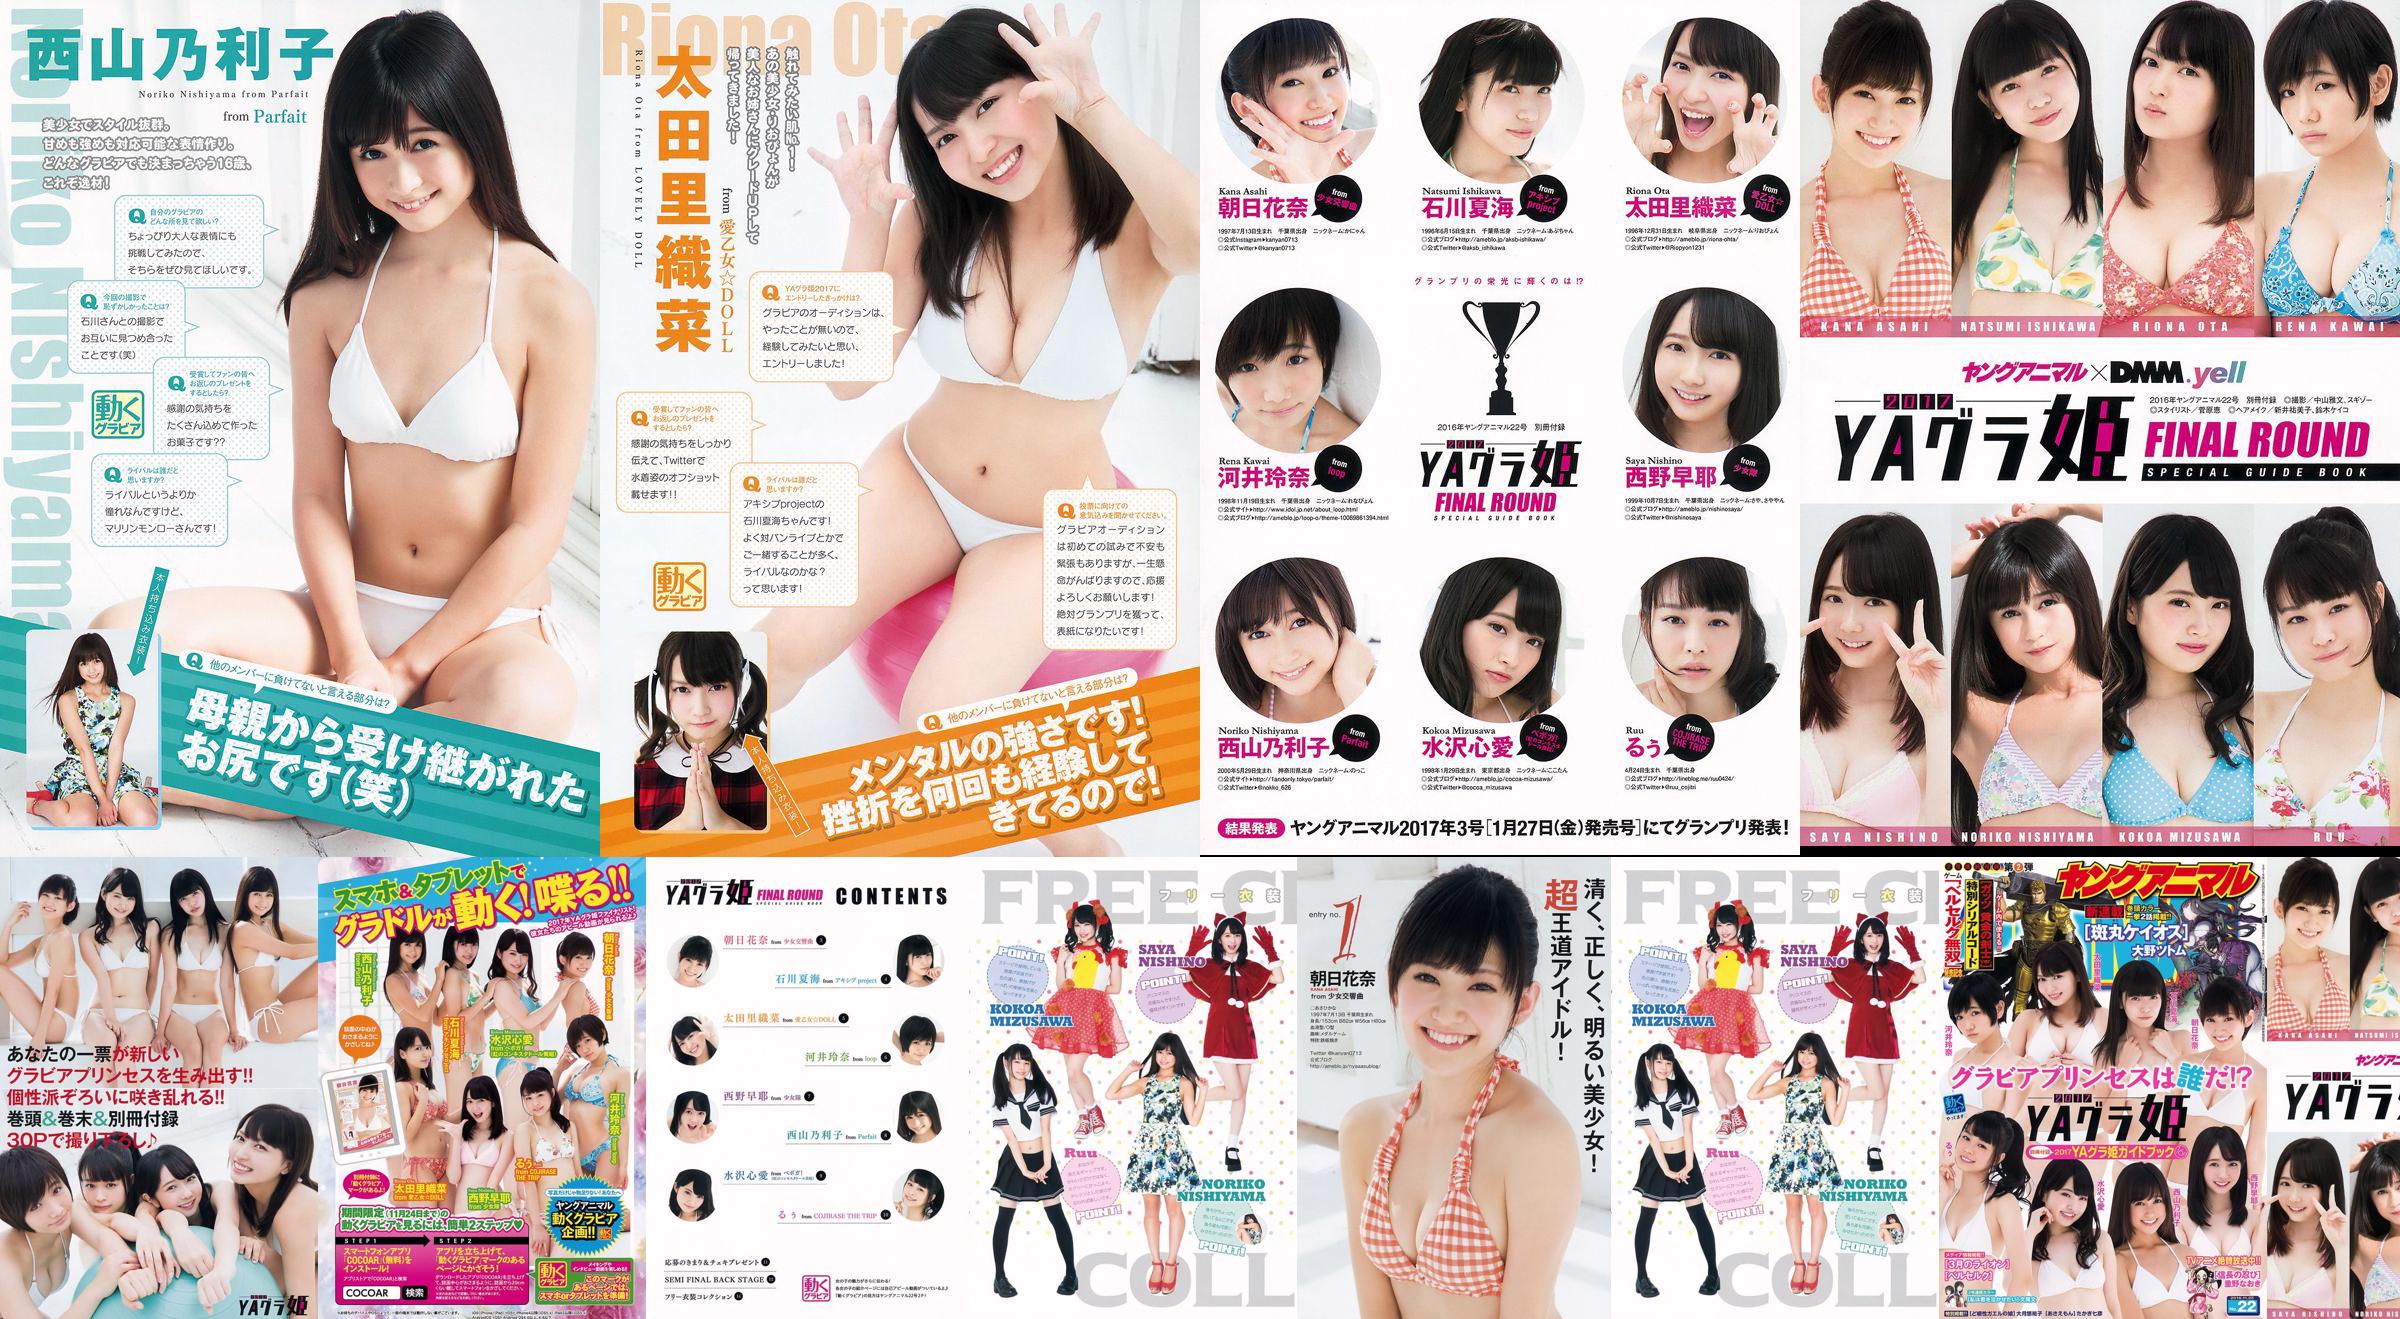 Mizusawa Beloved, Nishiyama Noriko, Nishino Haya, Kawai Reina, Ota Rina, Ishikawa Natsumi, Asahi Hana [น้องสัตว์] นิตยสารภาพถ่ายฉบับที่ 22 ประจำปี 2559 No.fd3854 หน้า 1